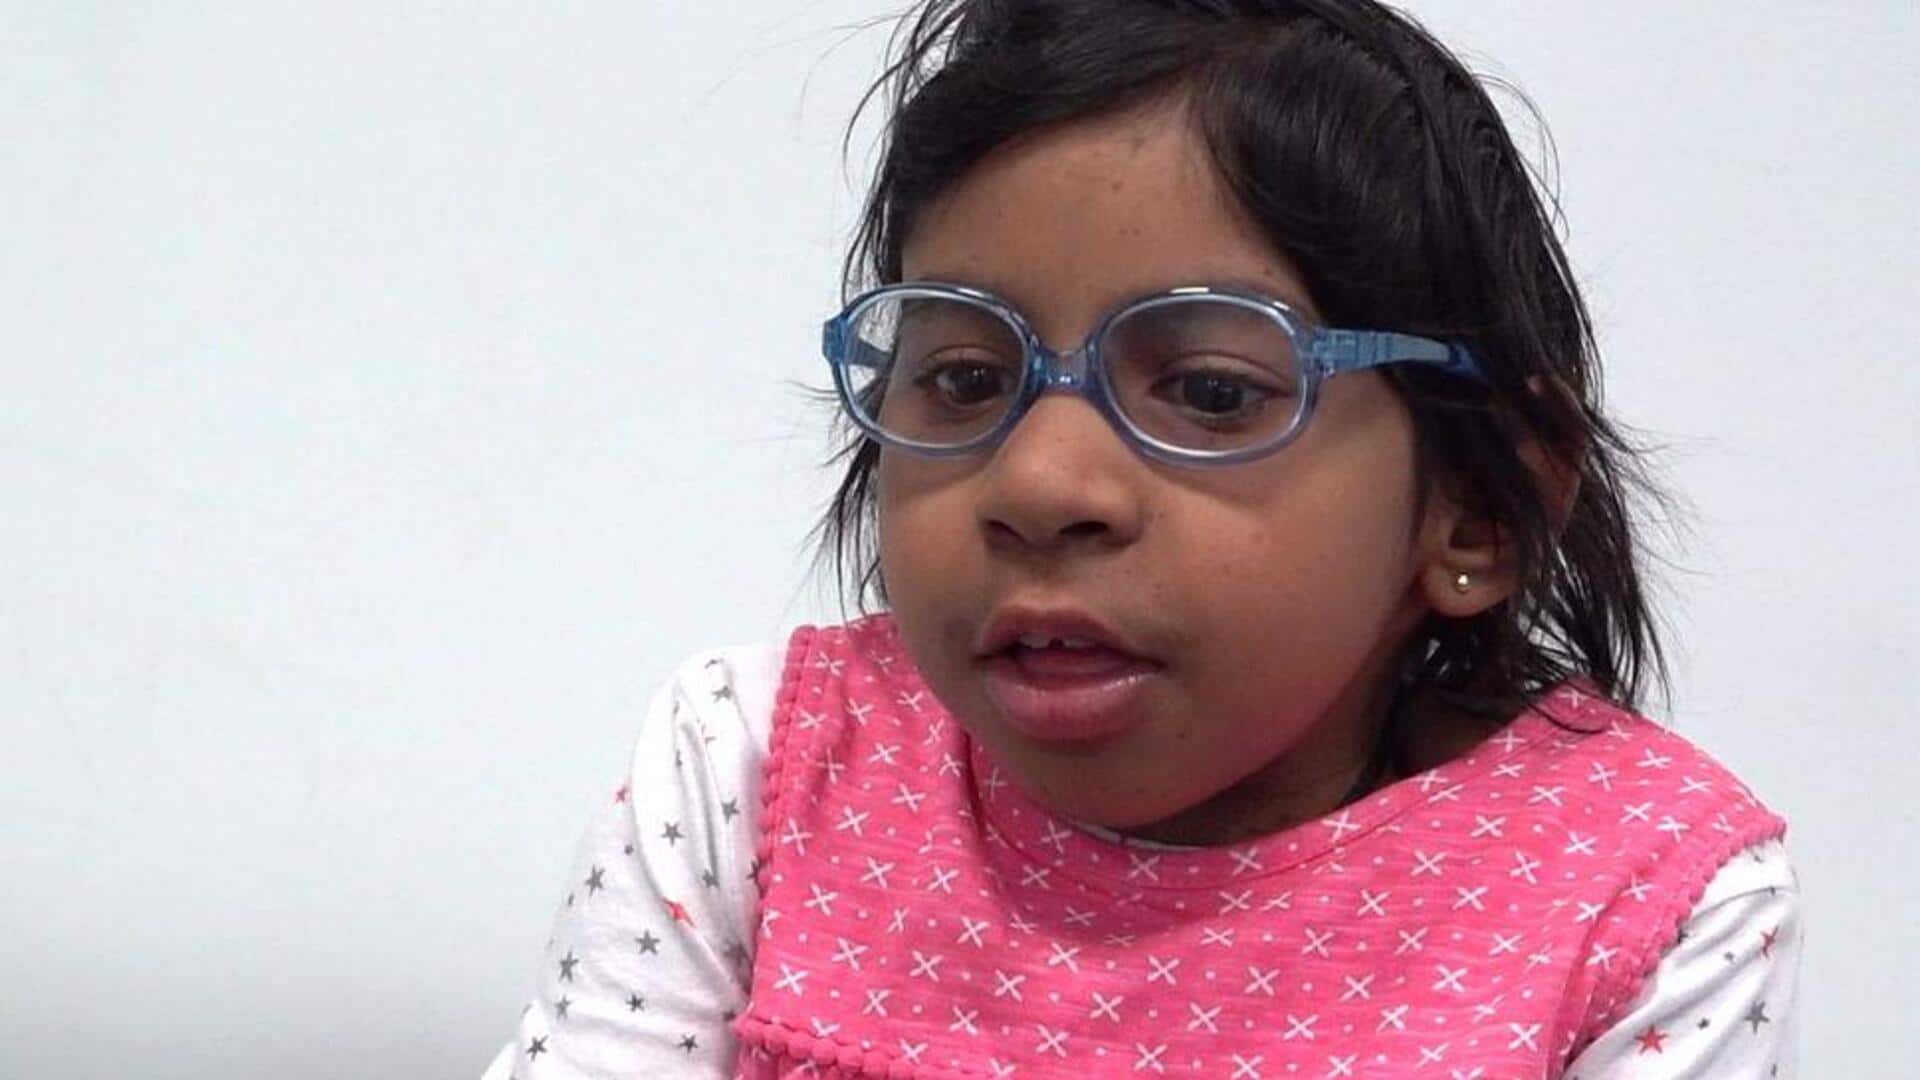 UK: Eight-year-old receives first kidney transplant without needing lifelong immunosuppressants